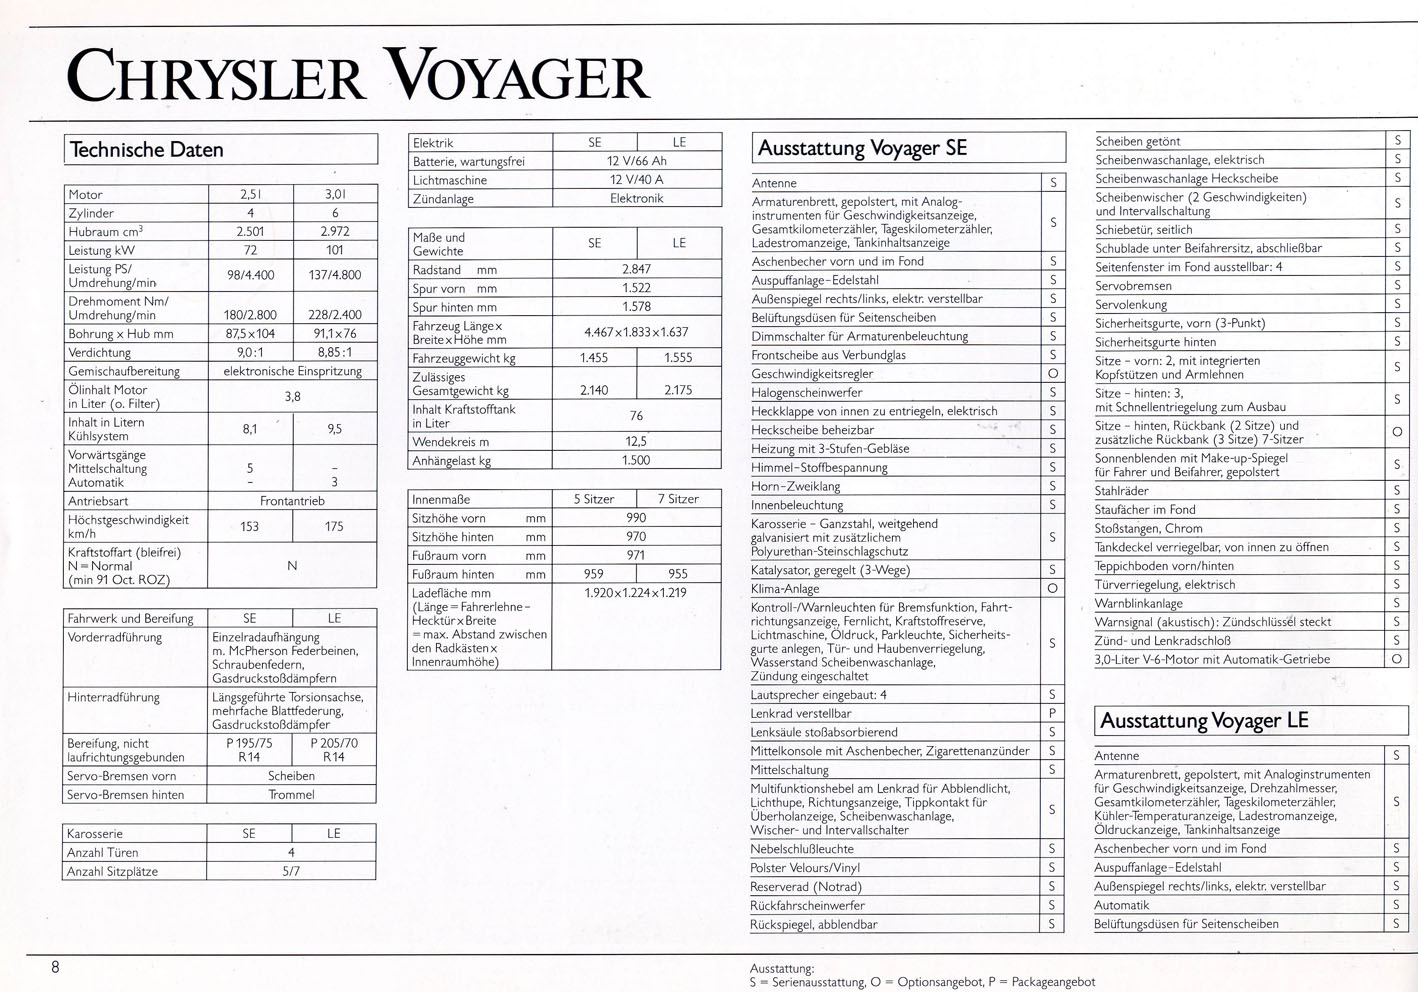 Chrysler Voyager Prospekt 1988 4/88 Autoprospekt brochure opuscolo catalog 